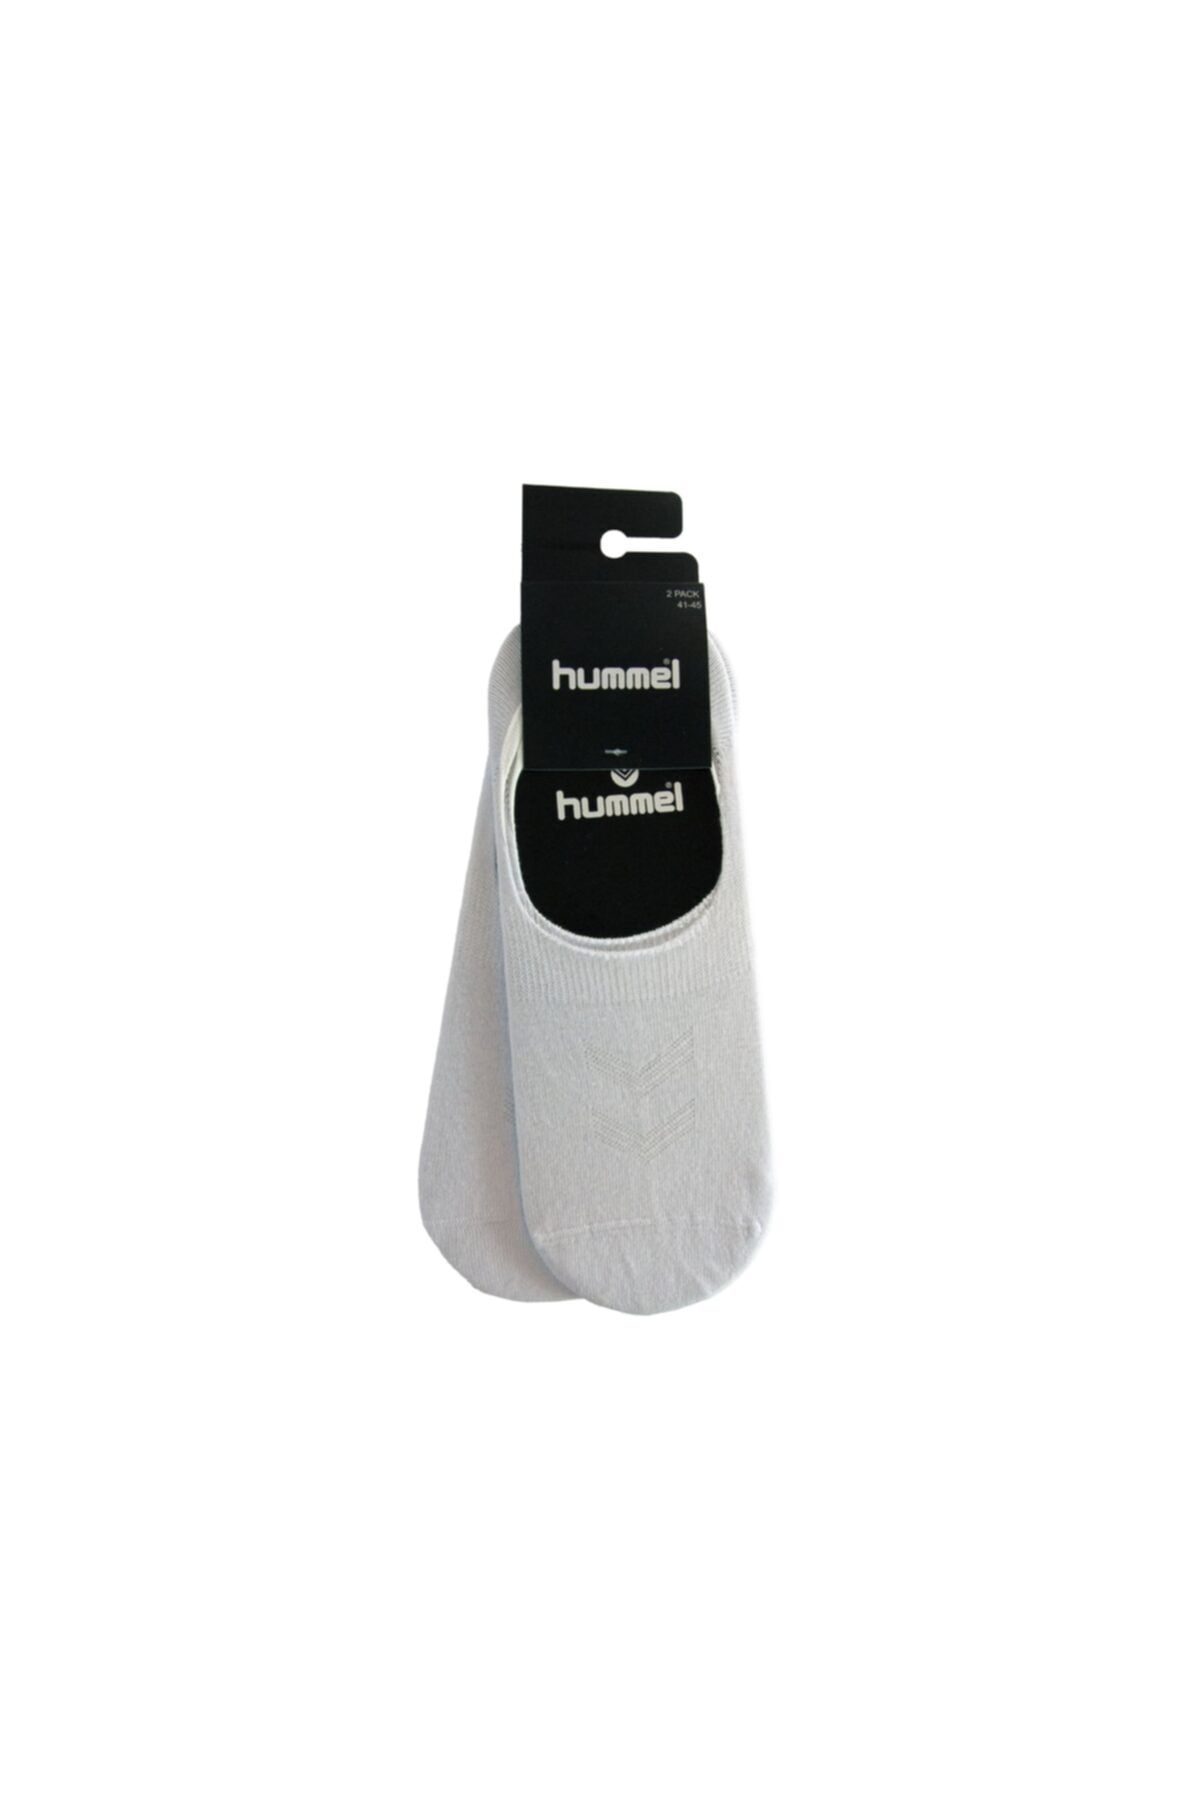 hummel Unisex Beyaz Çorap Mini Low Size 970154-9001